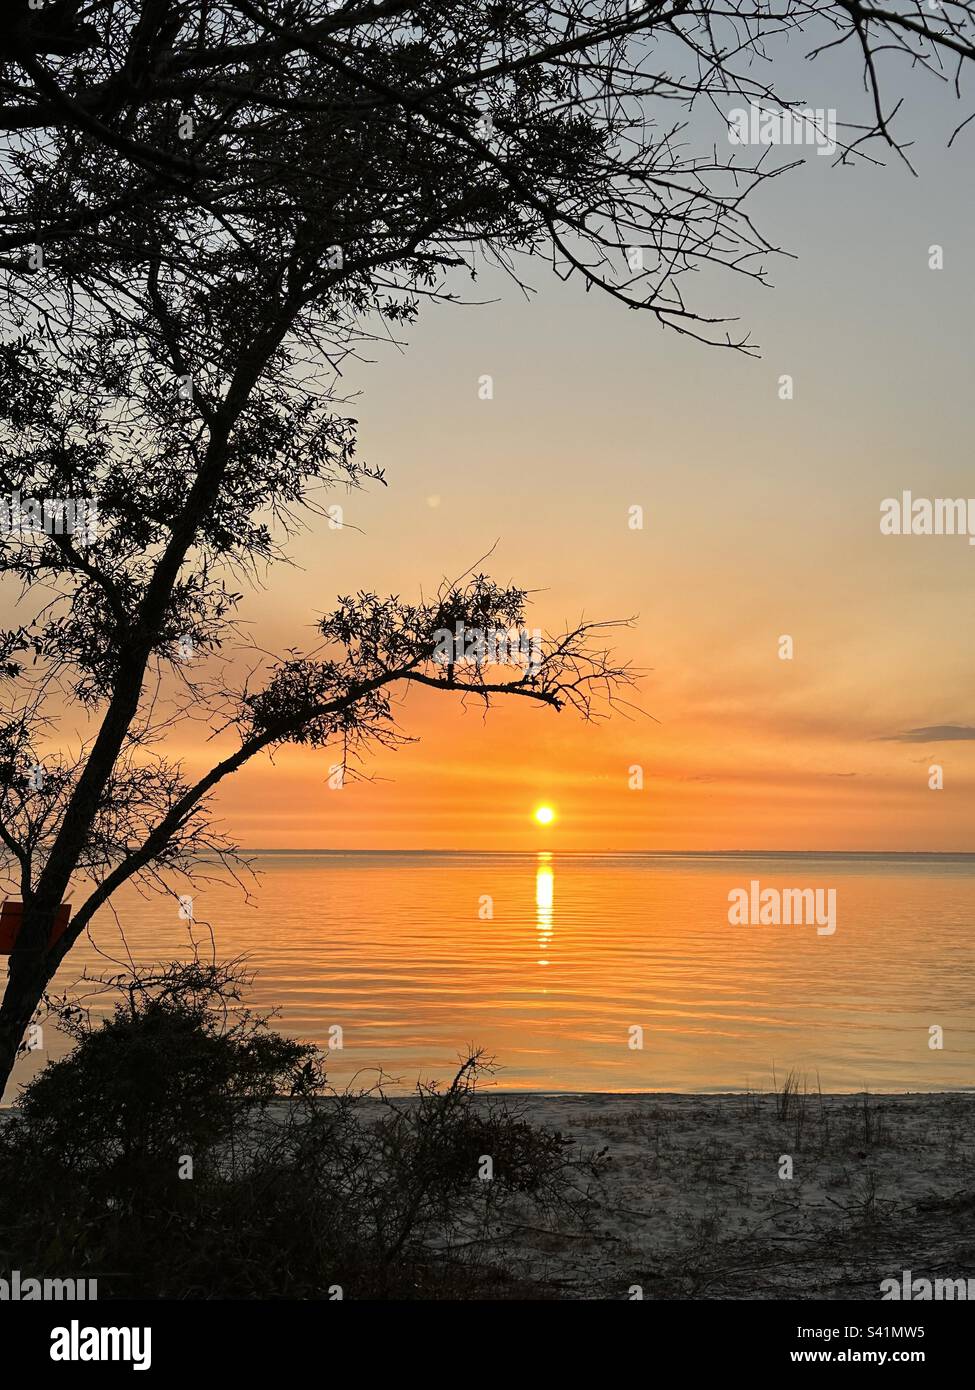 Silhouetten von Bäumen, goldener Sonnenuntergang, goldene Stunden, helle Orange Farbe Stockfoto